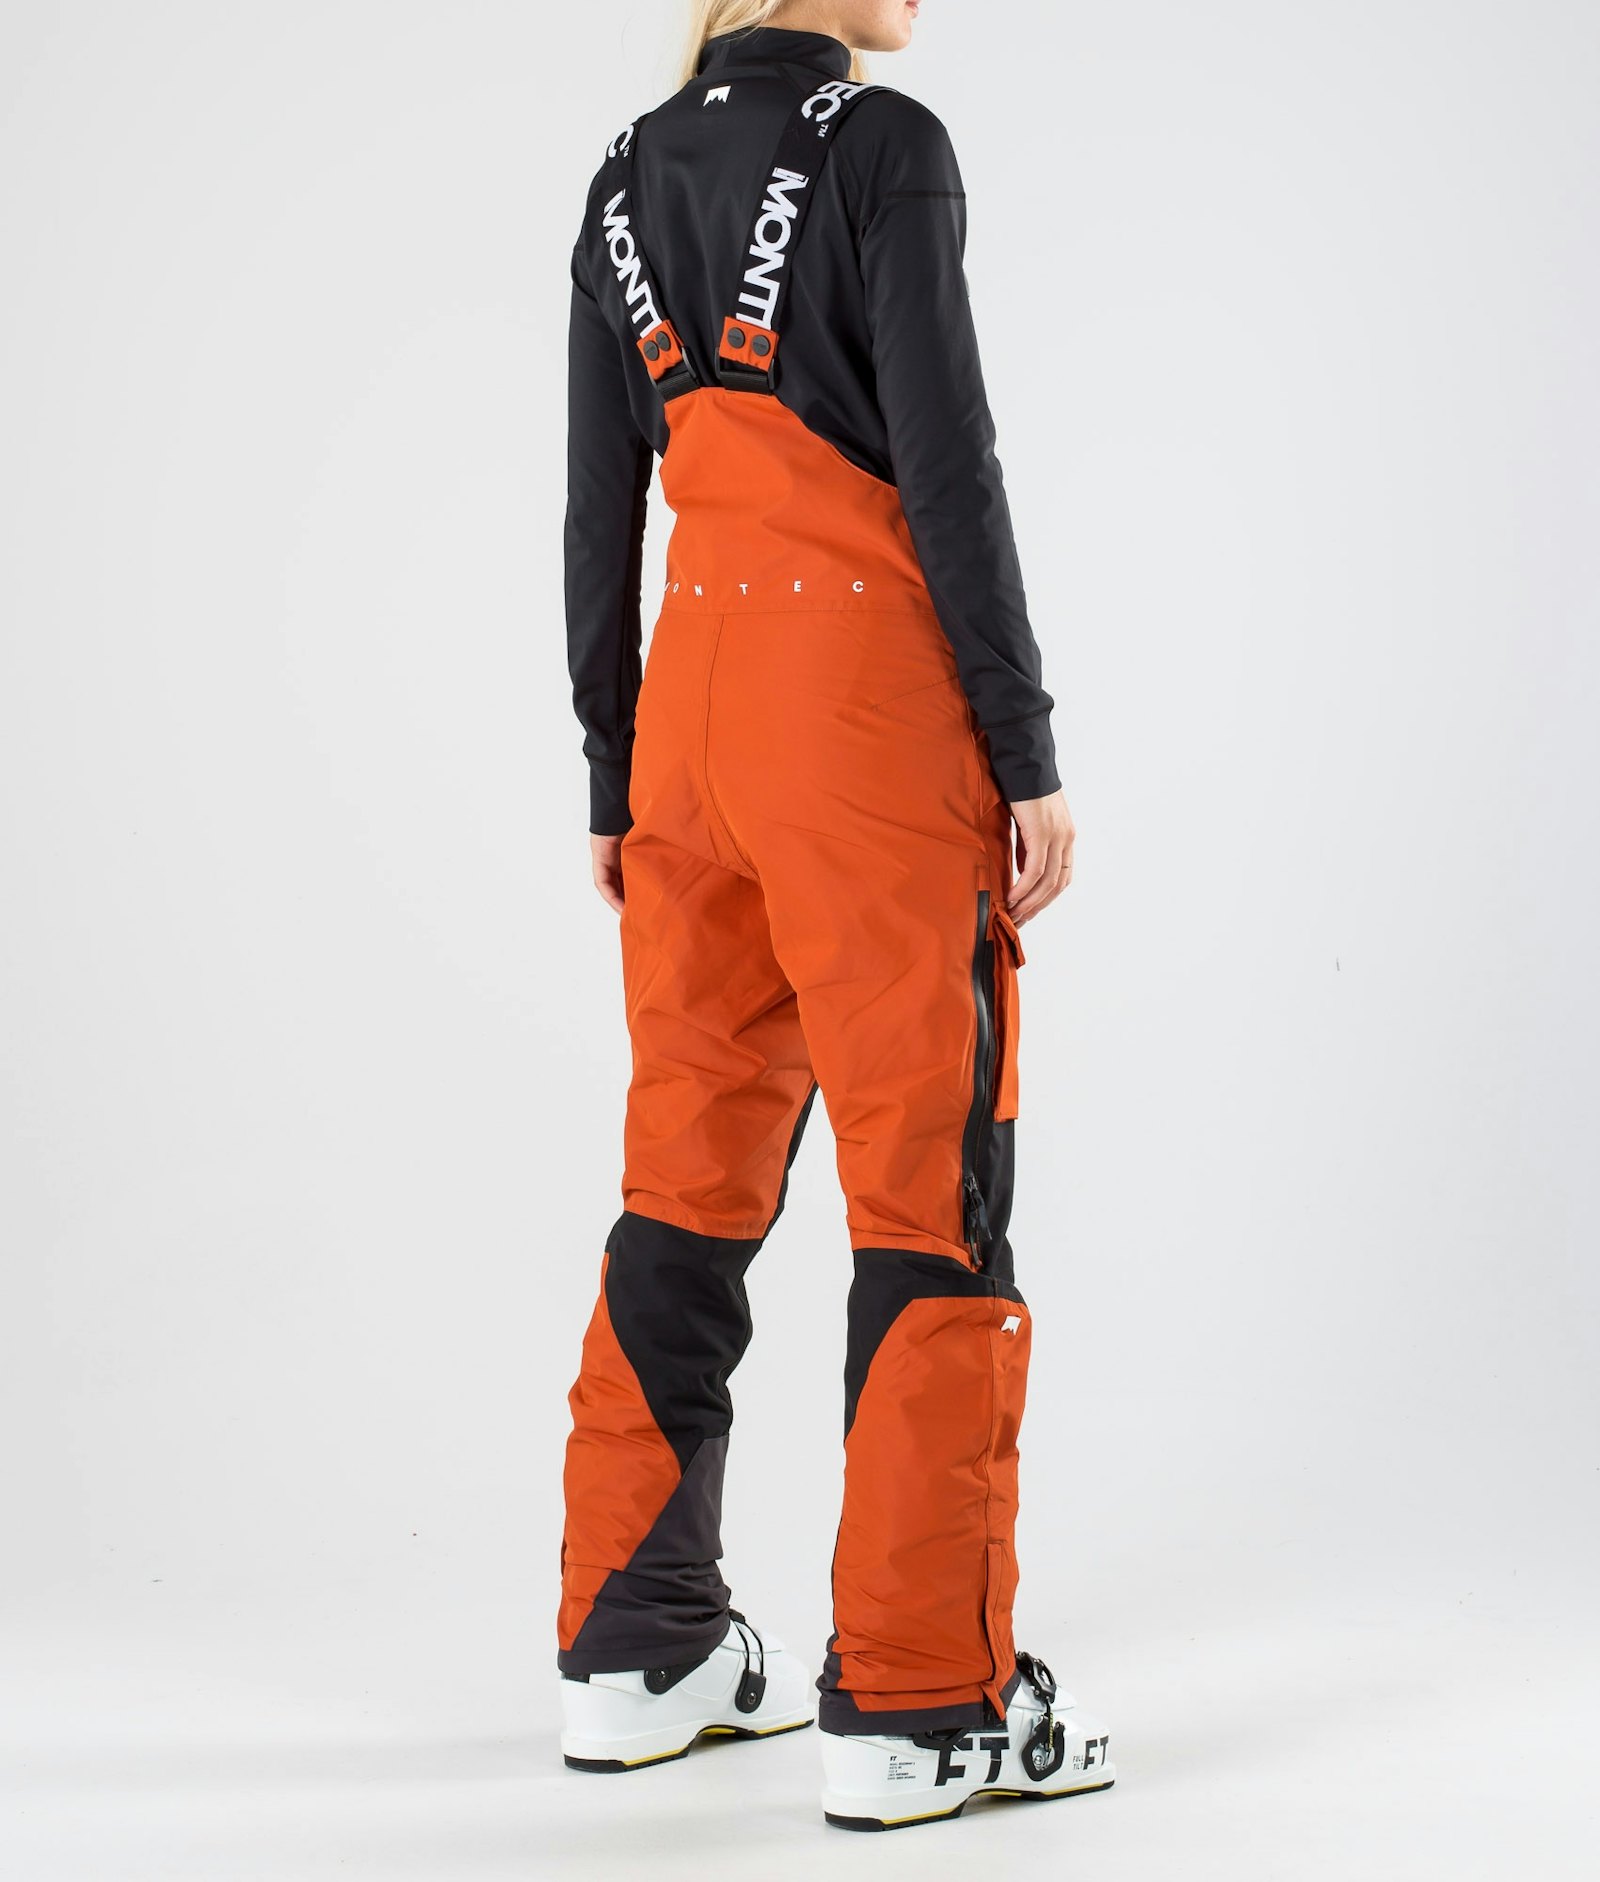 Fawk W 2019 Pantalon de Ski Femme Clay/Black